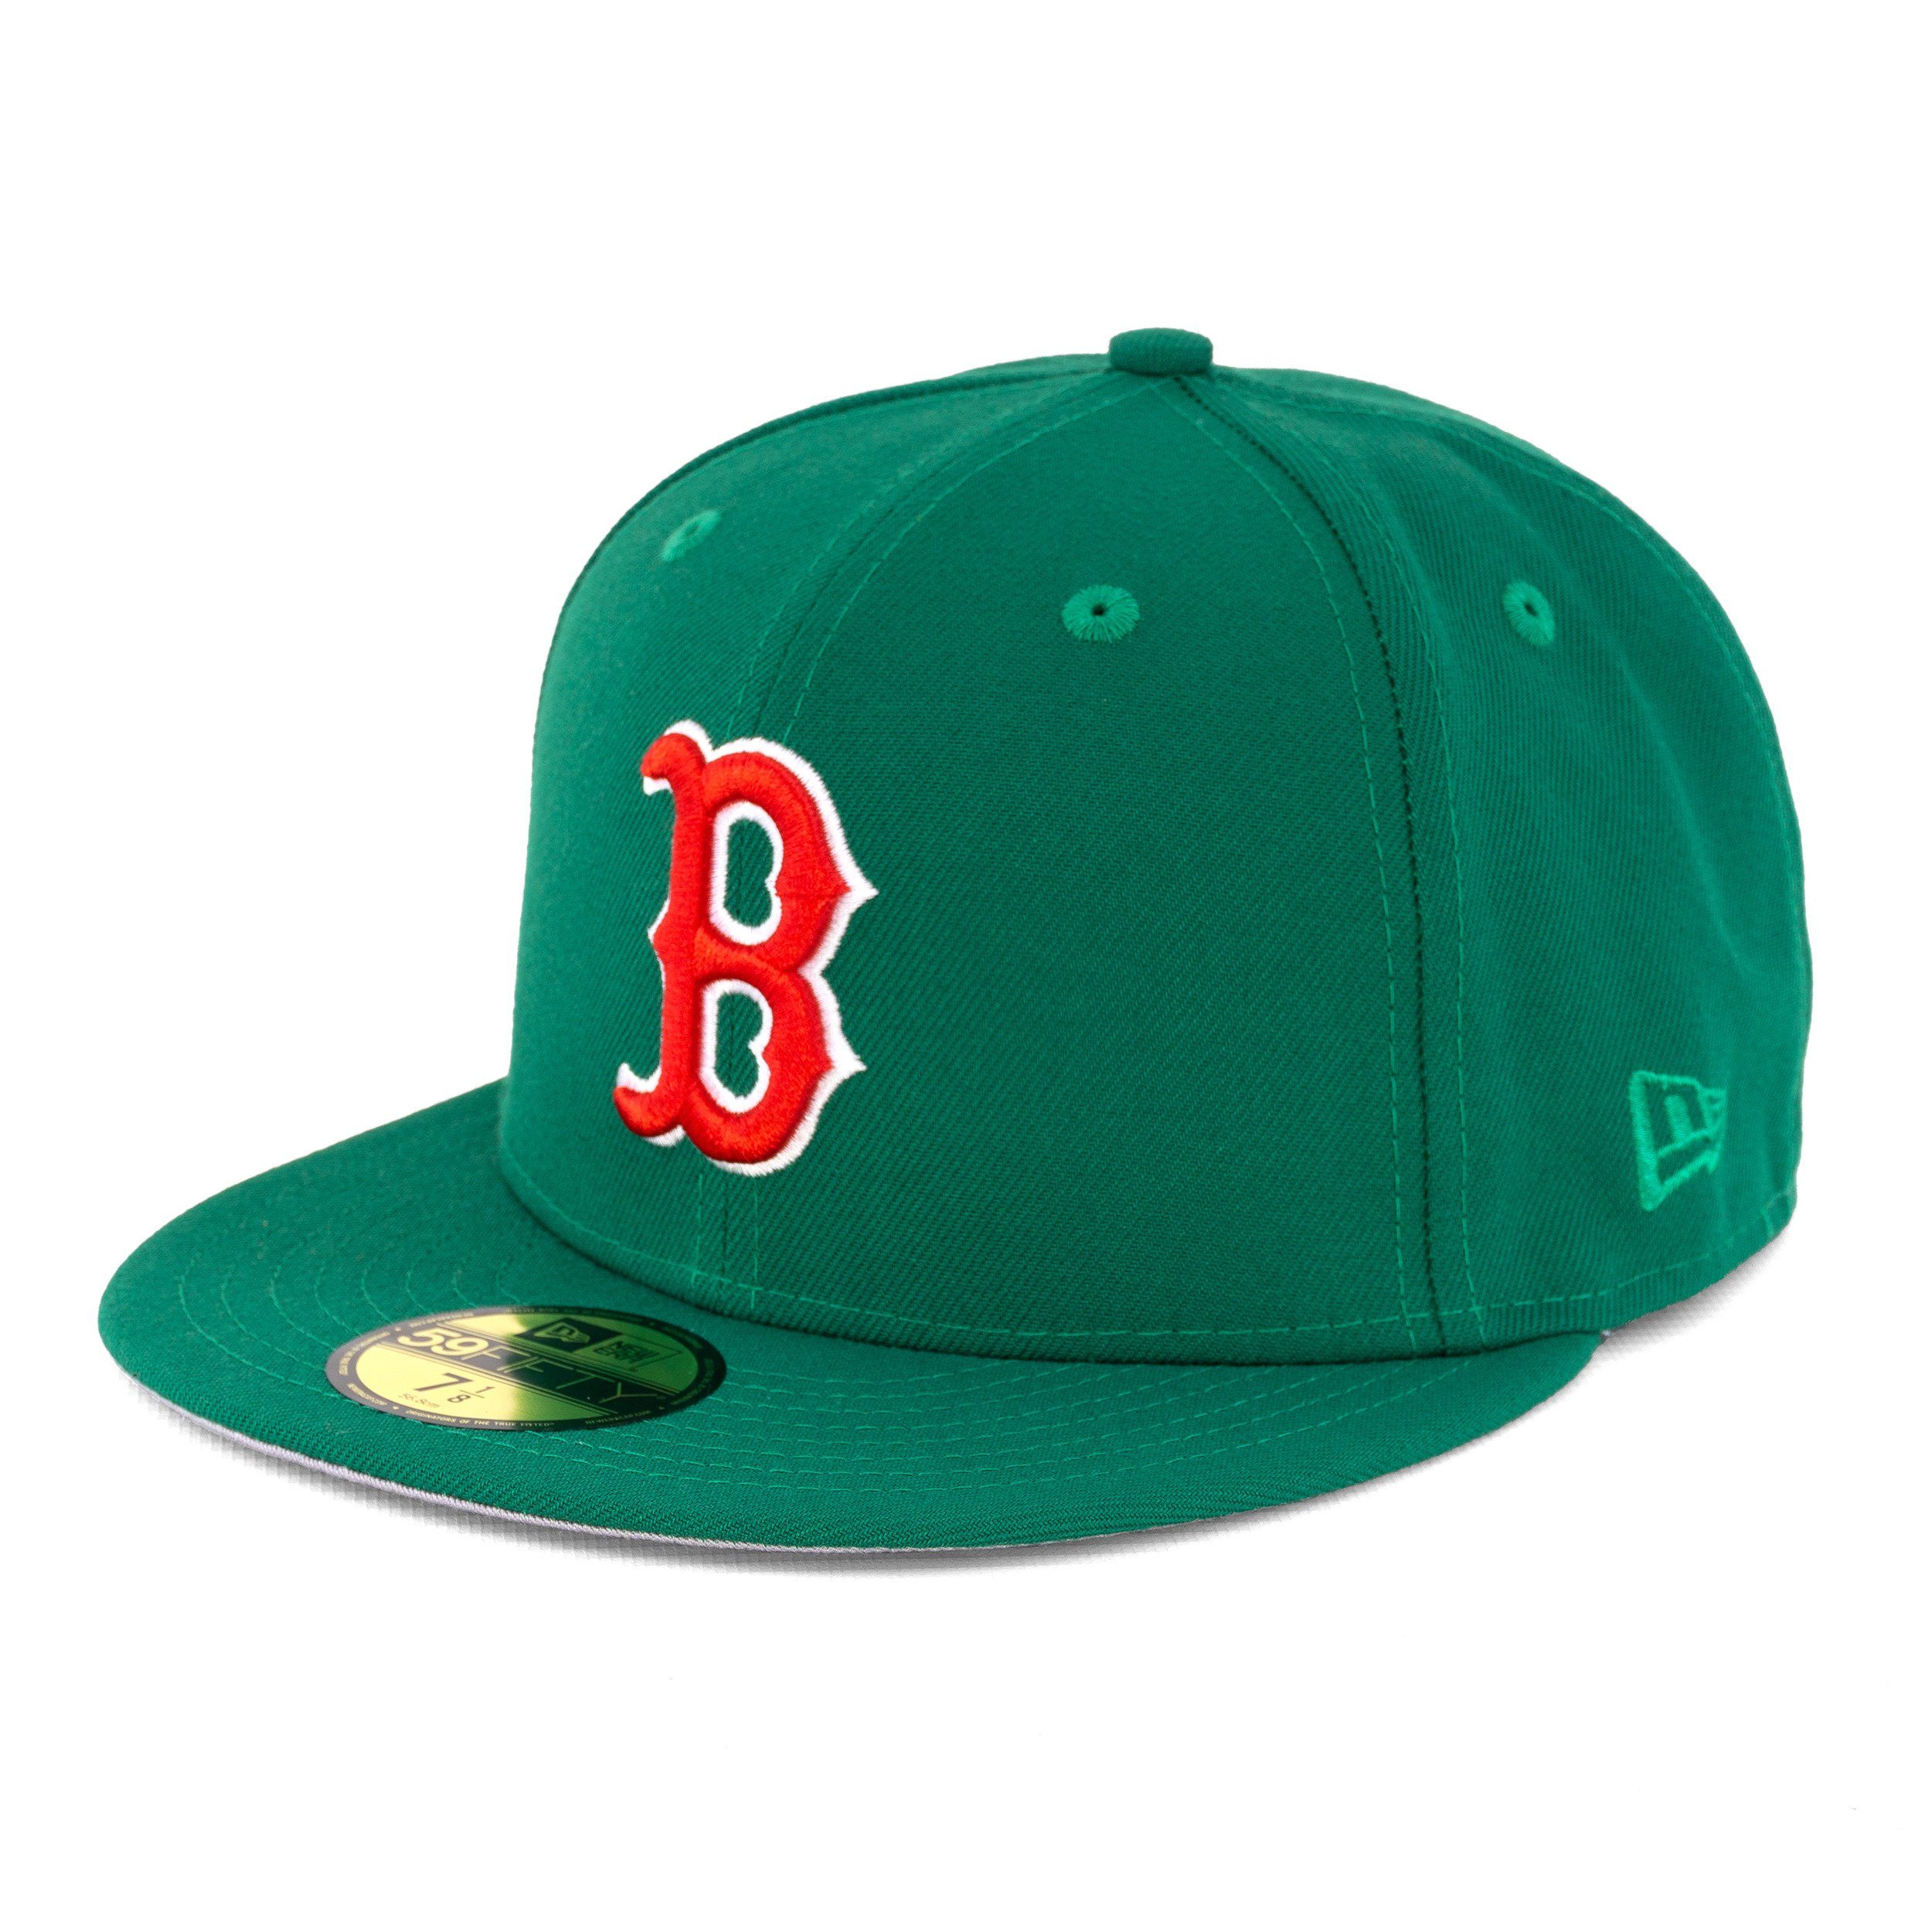 Sox 59 Boston New Fifty Era Red Era (1-St) Cap New Baseball Cap